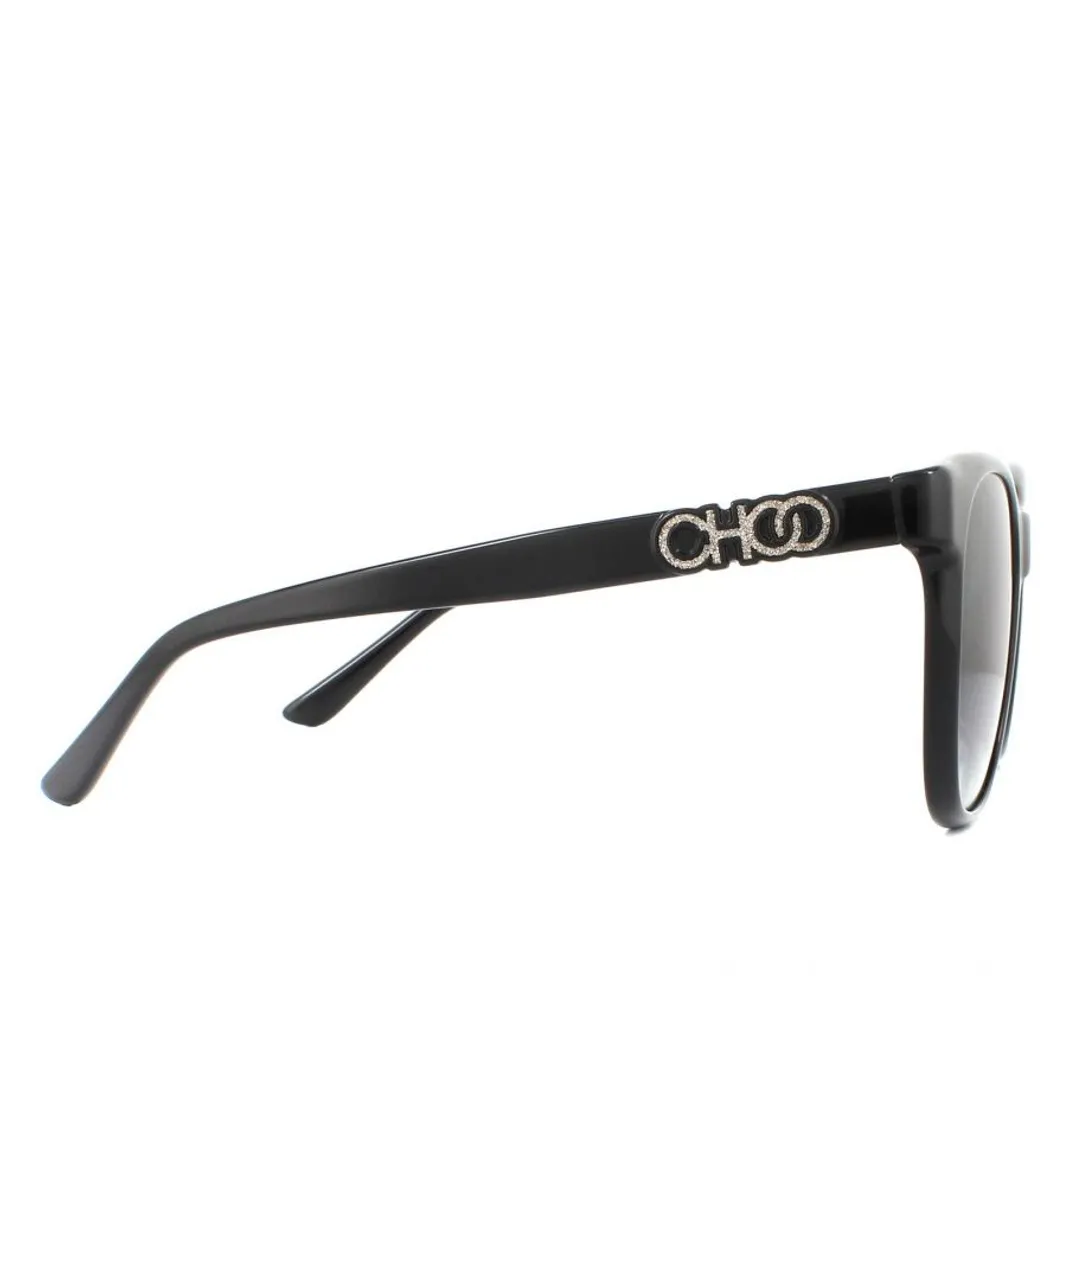 Jimmy Choo Womens Sunglasses JUNE/F/S 807 9O Black Dark Grey Gradient - One